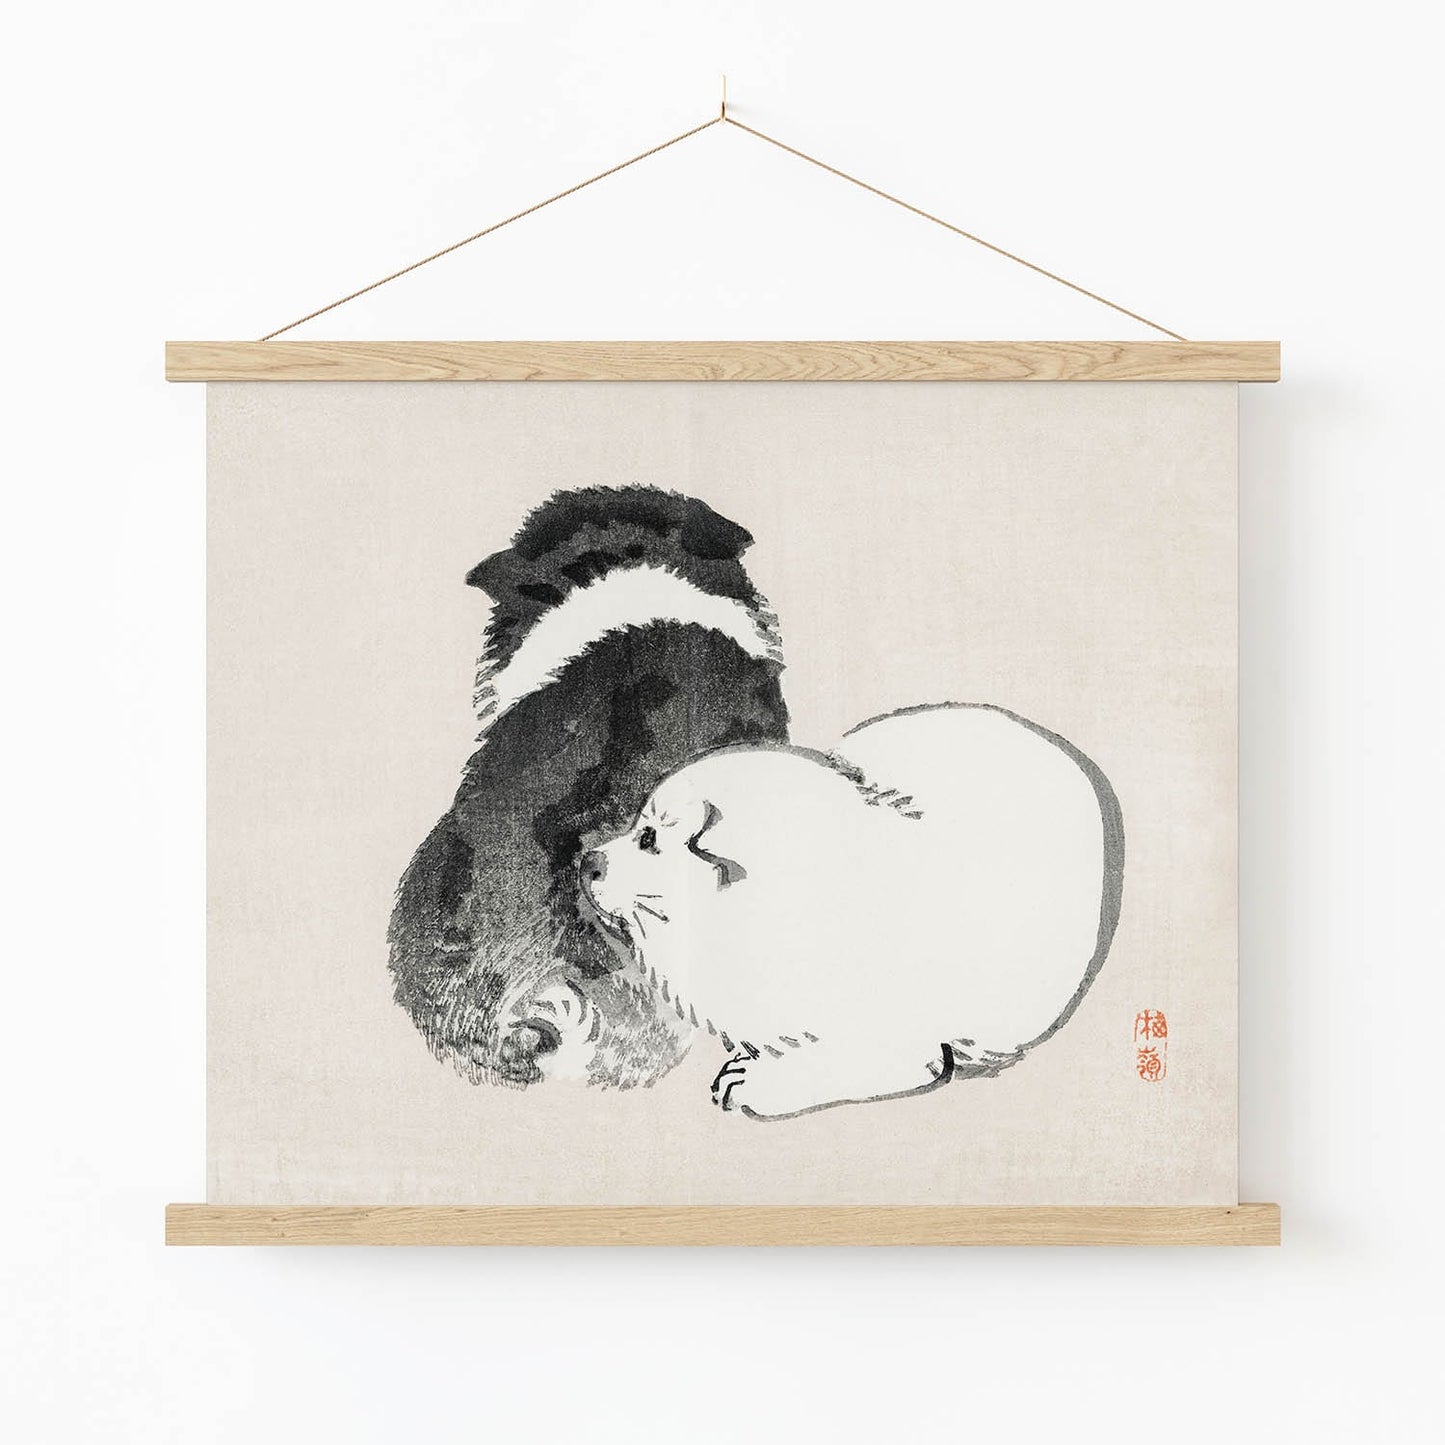 Minimalist Puppy Art Print in Wood Hanger Frame on Wall